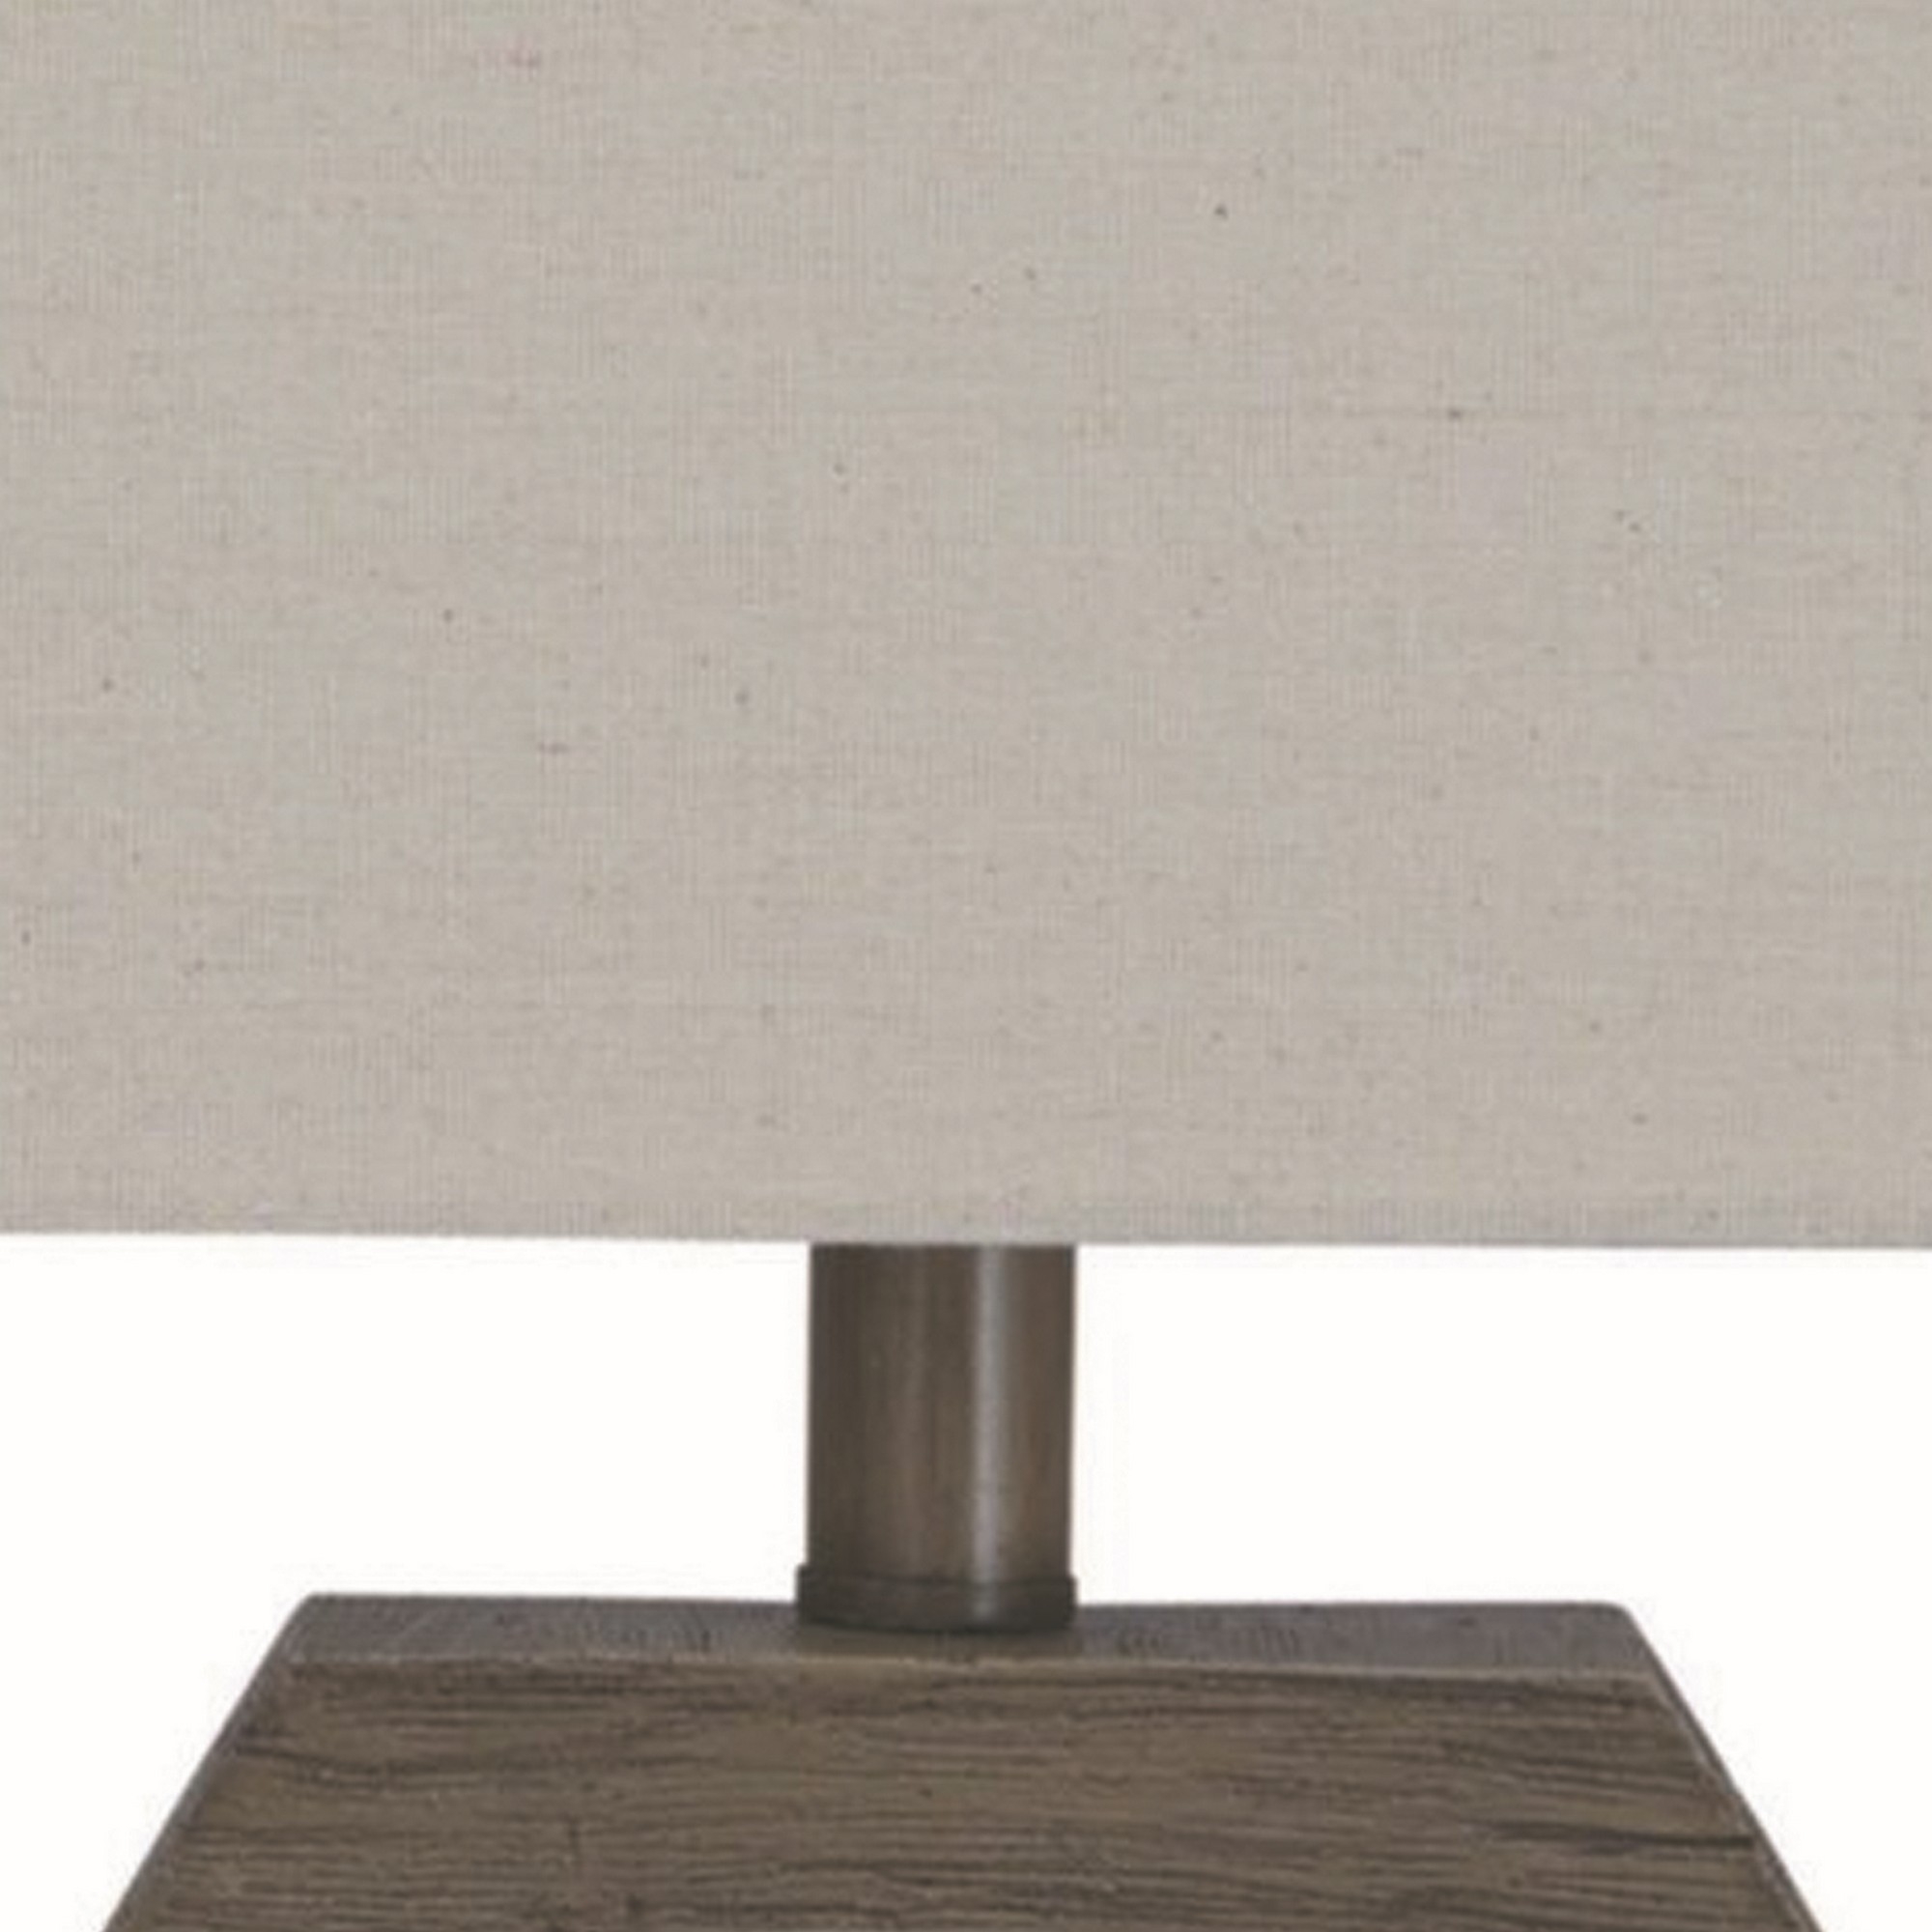 Hexagonal Wooden Base Table Lamp With Rectangular Shade, Brown And Gray- Saltoro Sherpi